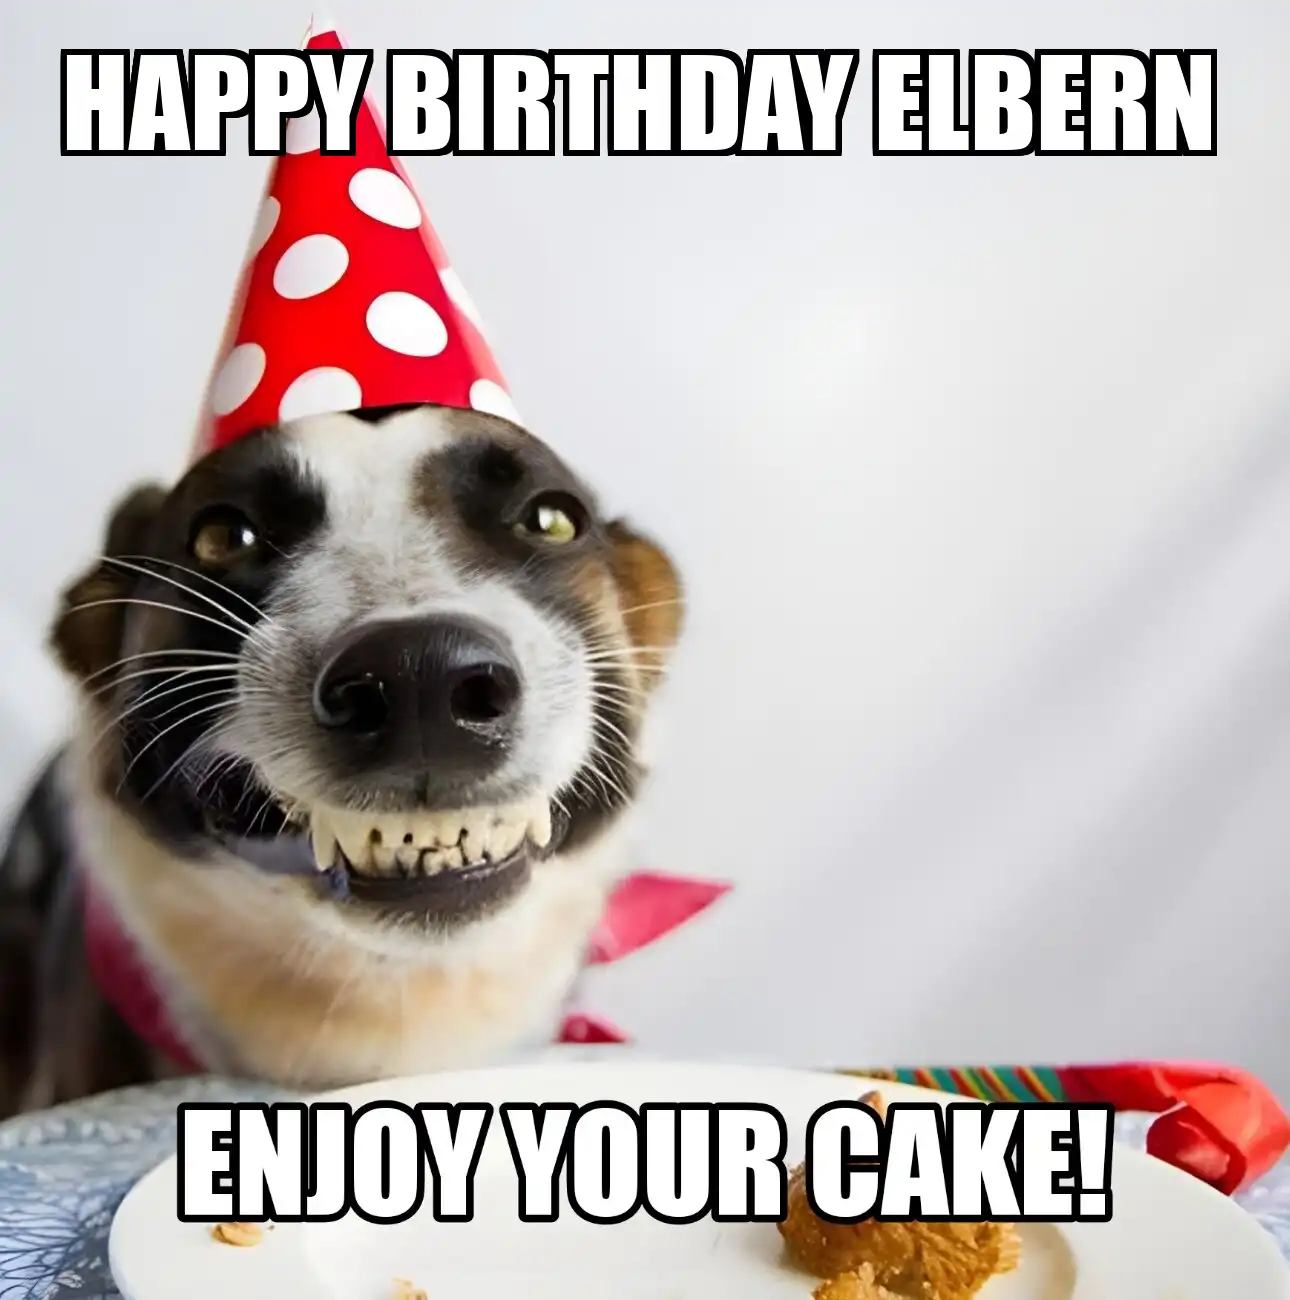 Happy Birthday Elbern Enjoy Your Cake Dog Meme